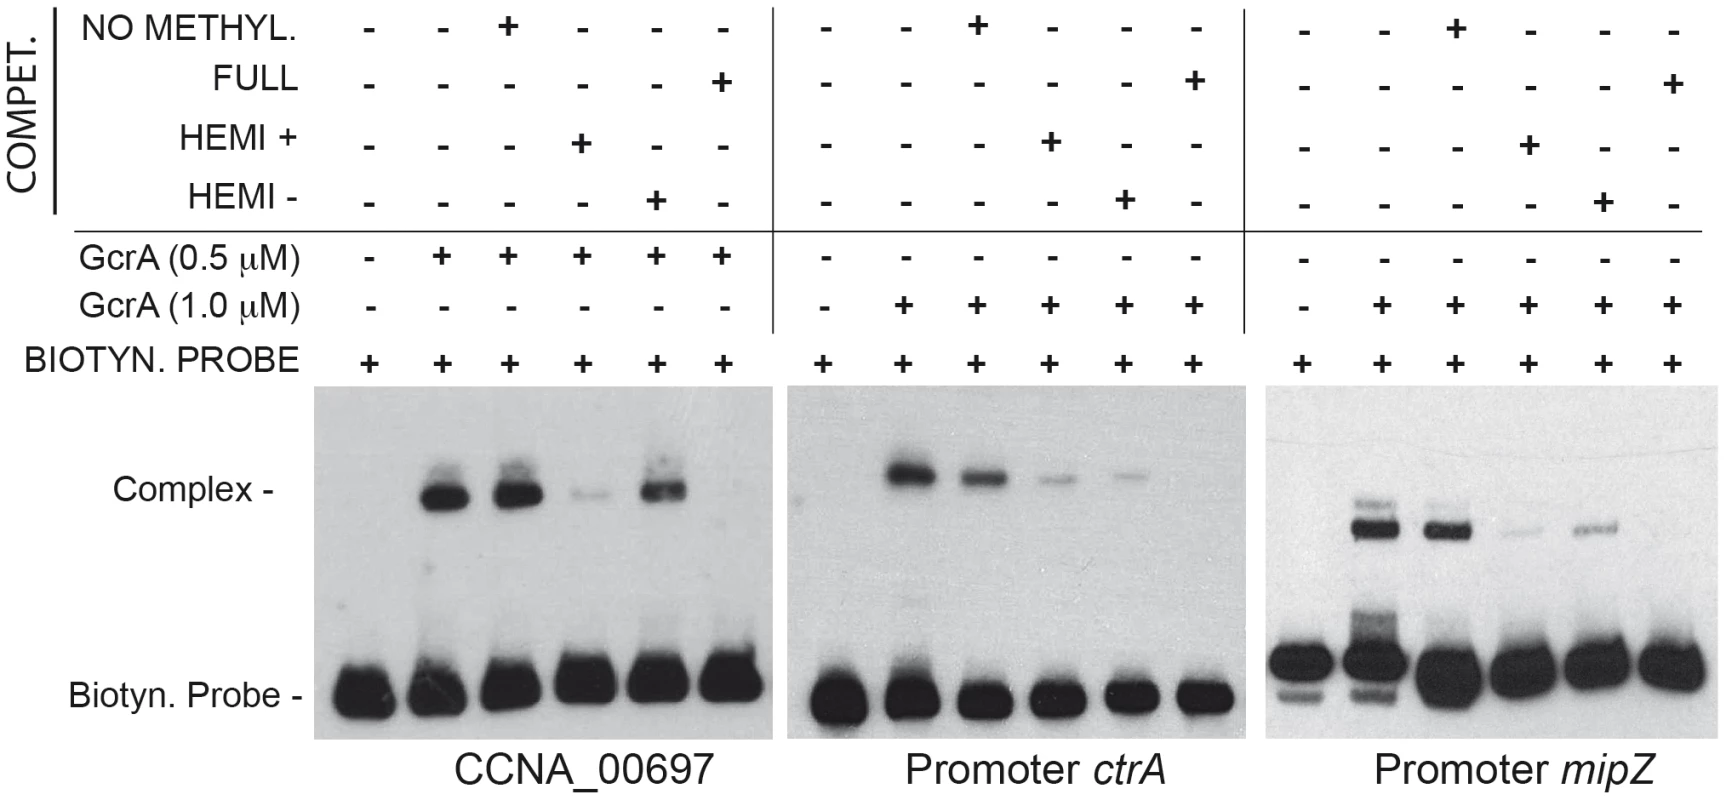 GcrA DNA binding depends on CcrM methylation state.